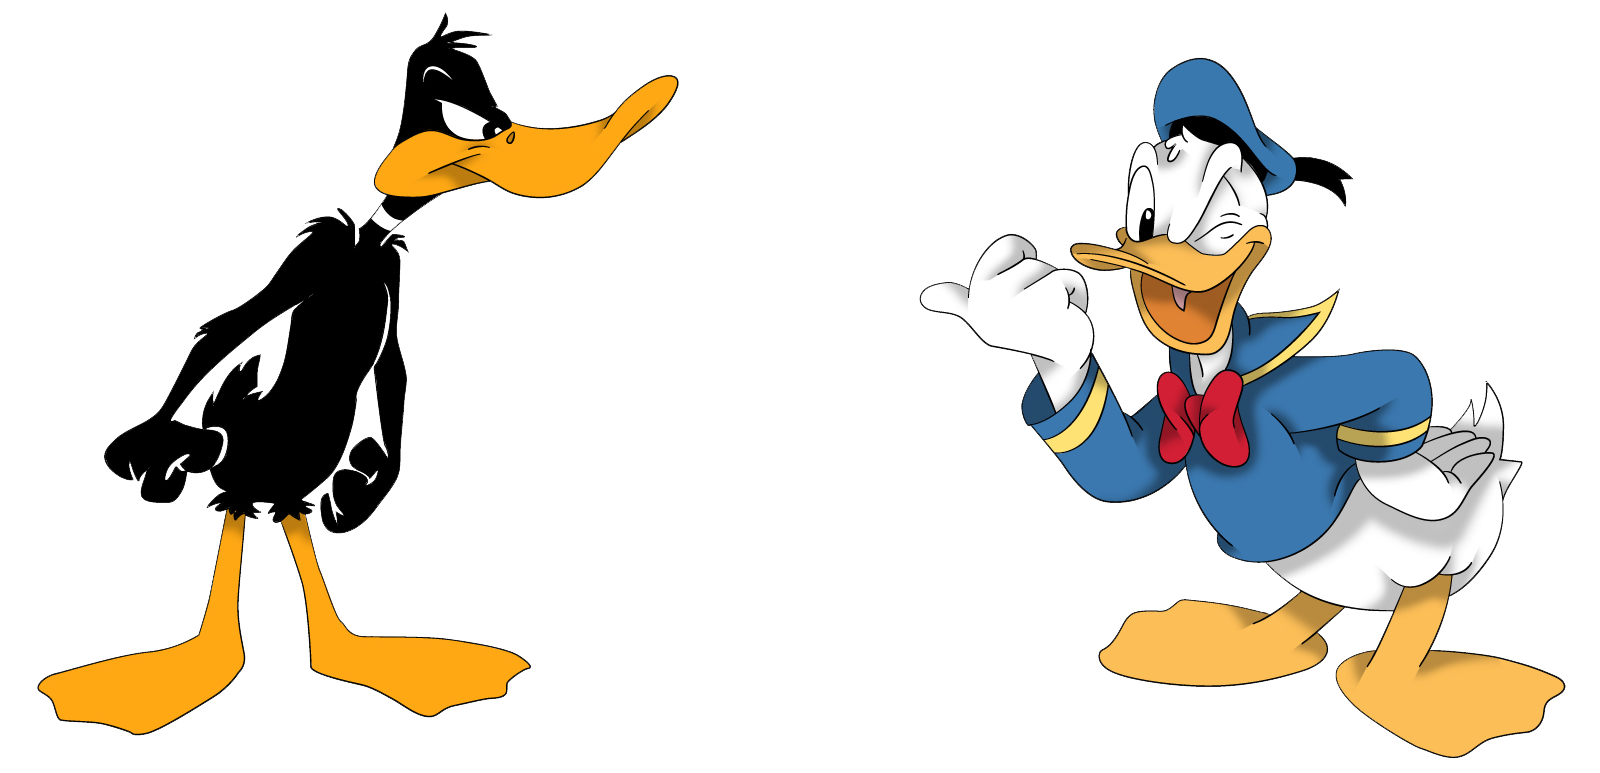 daffy duck vs donald duck arena